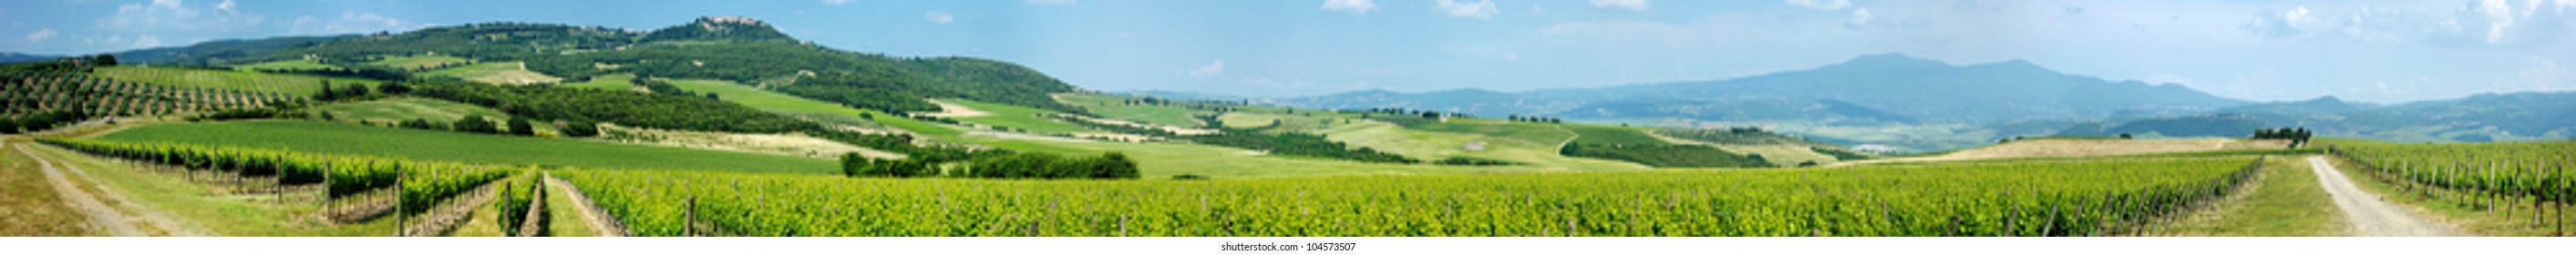 Panorama of beautiful wine fields in Italy